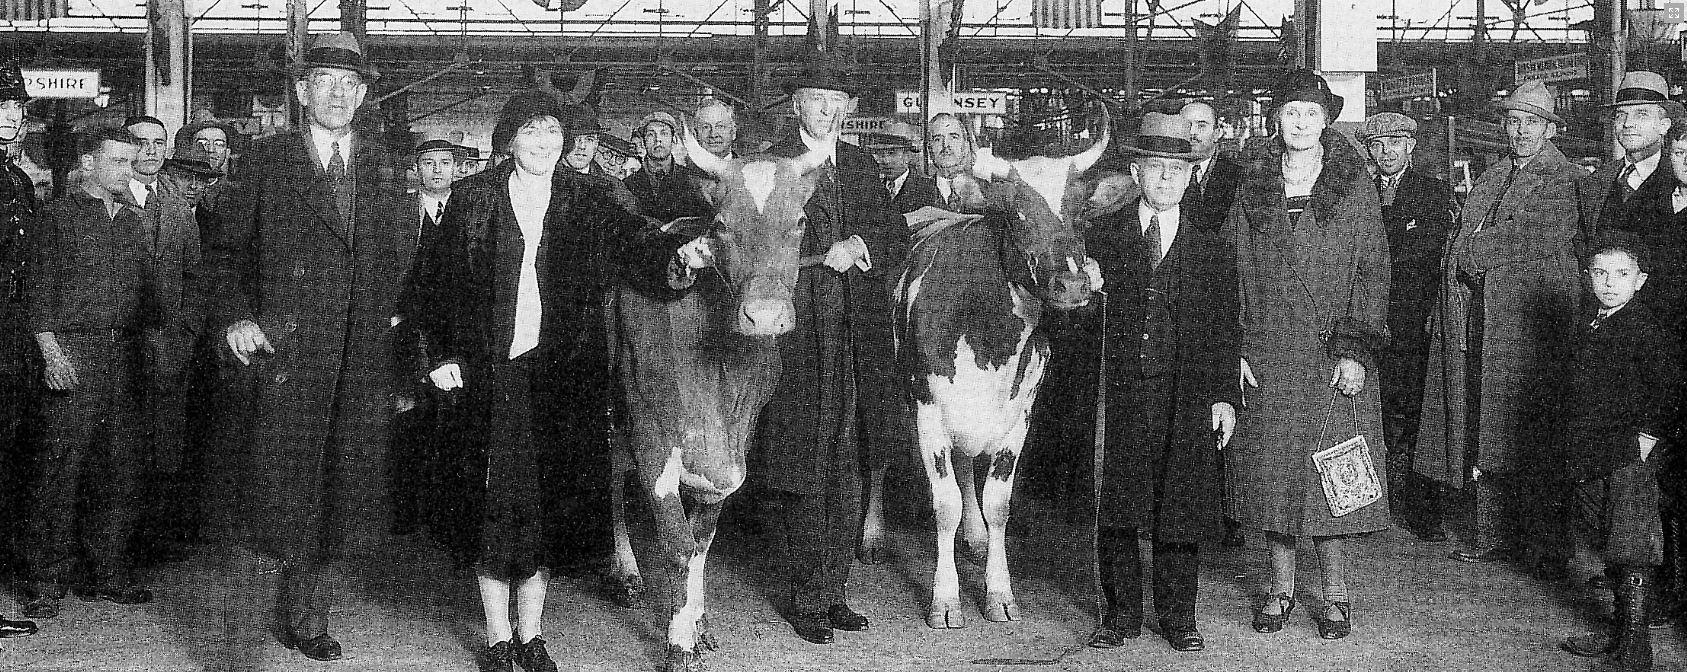 2 Historic Photo from the Pennsylvania Farm Show, cattle show.JPG